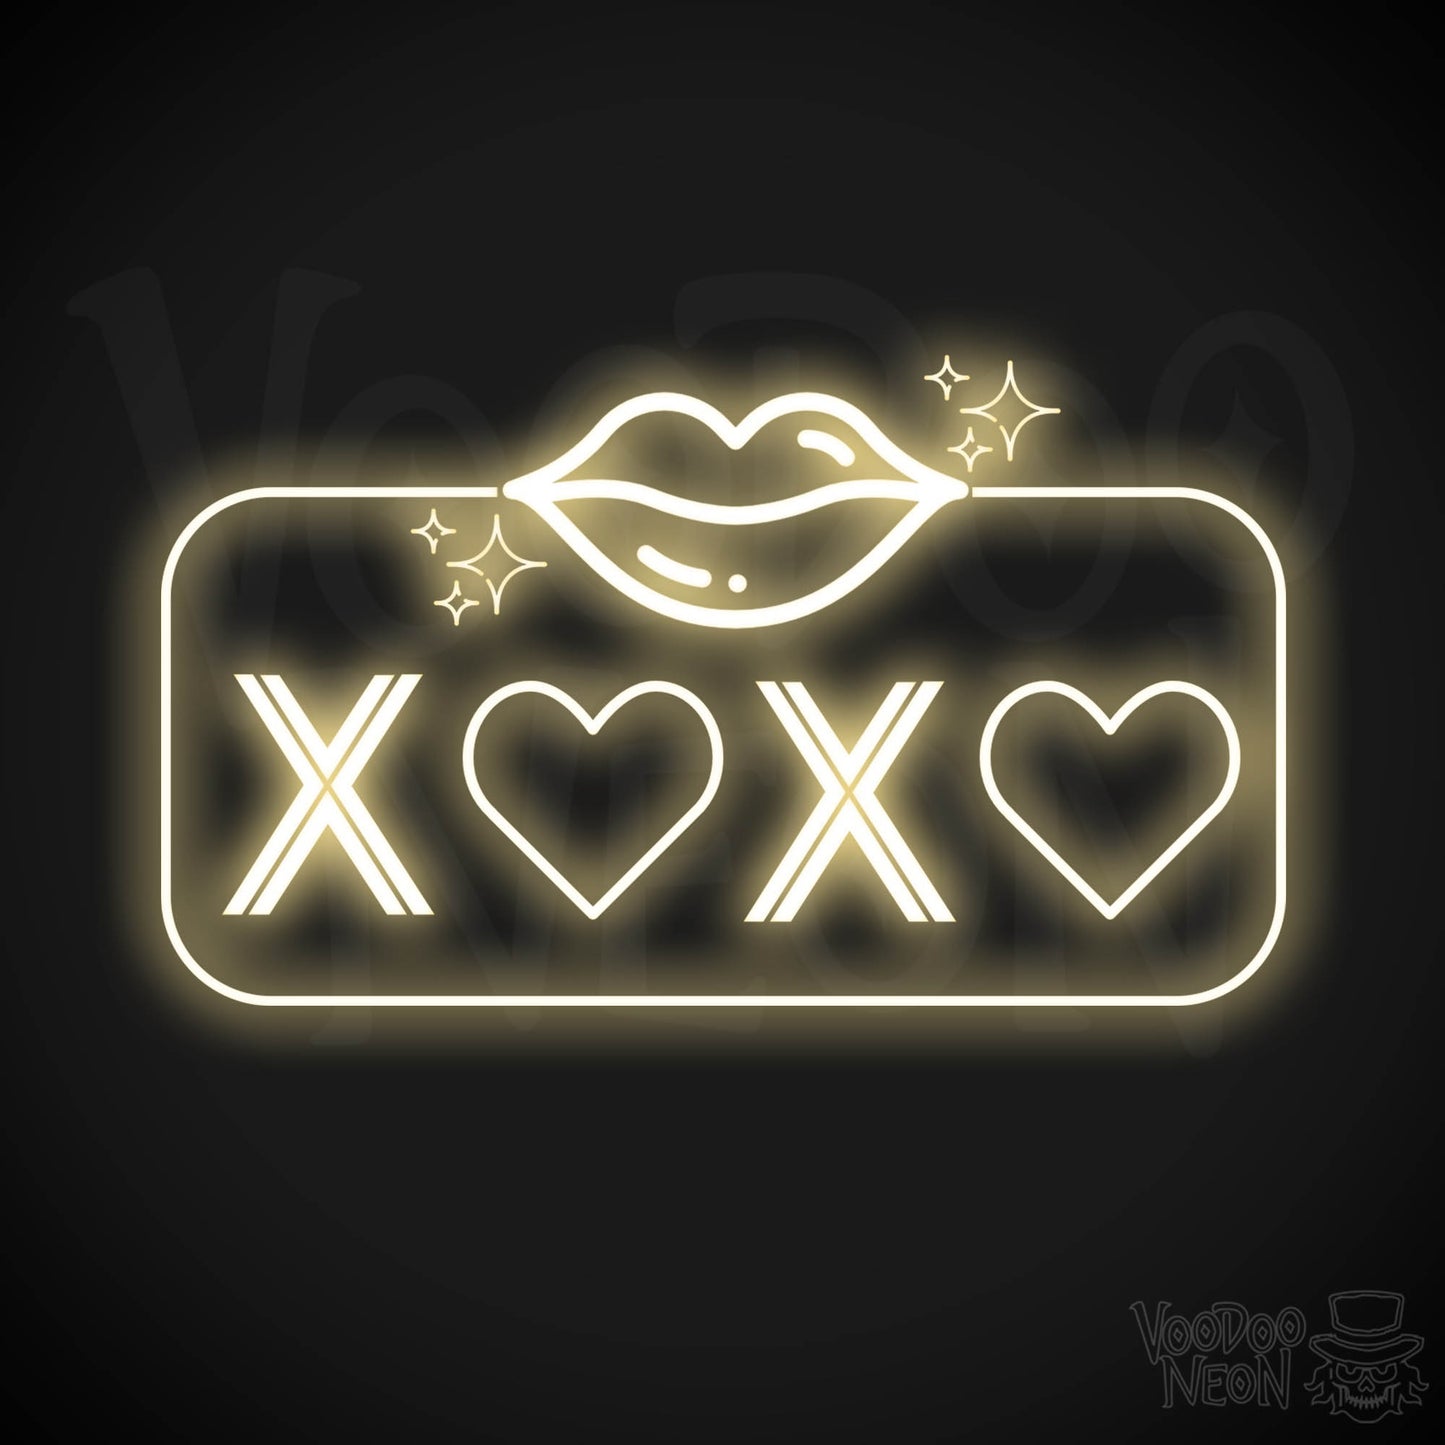 Xoxo Neon Sign - Neon XOXO - Kiss Hug Neon Wall Art - Color Warm White